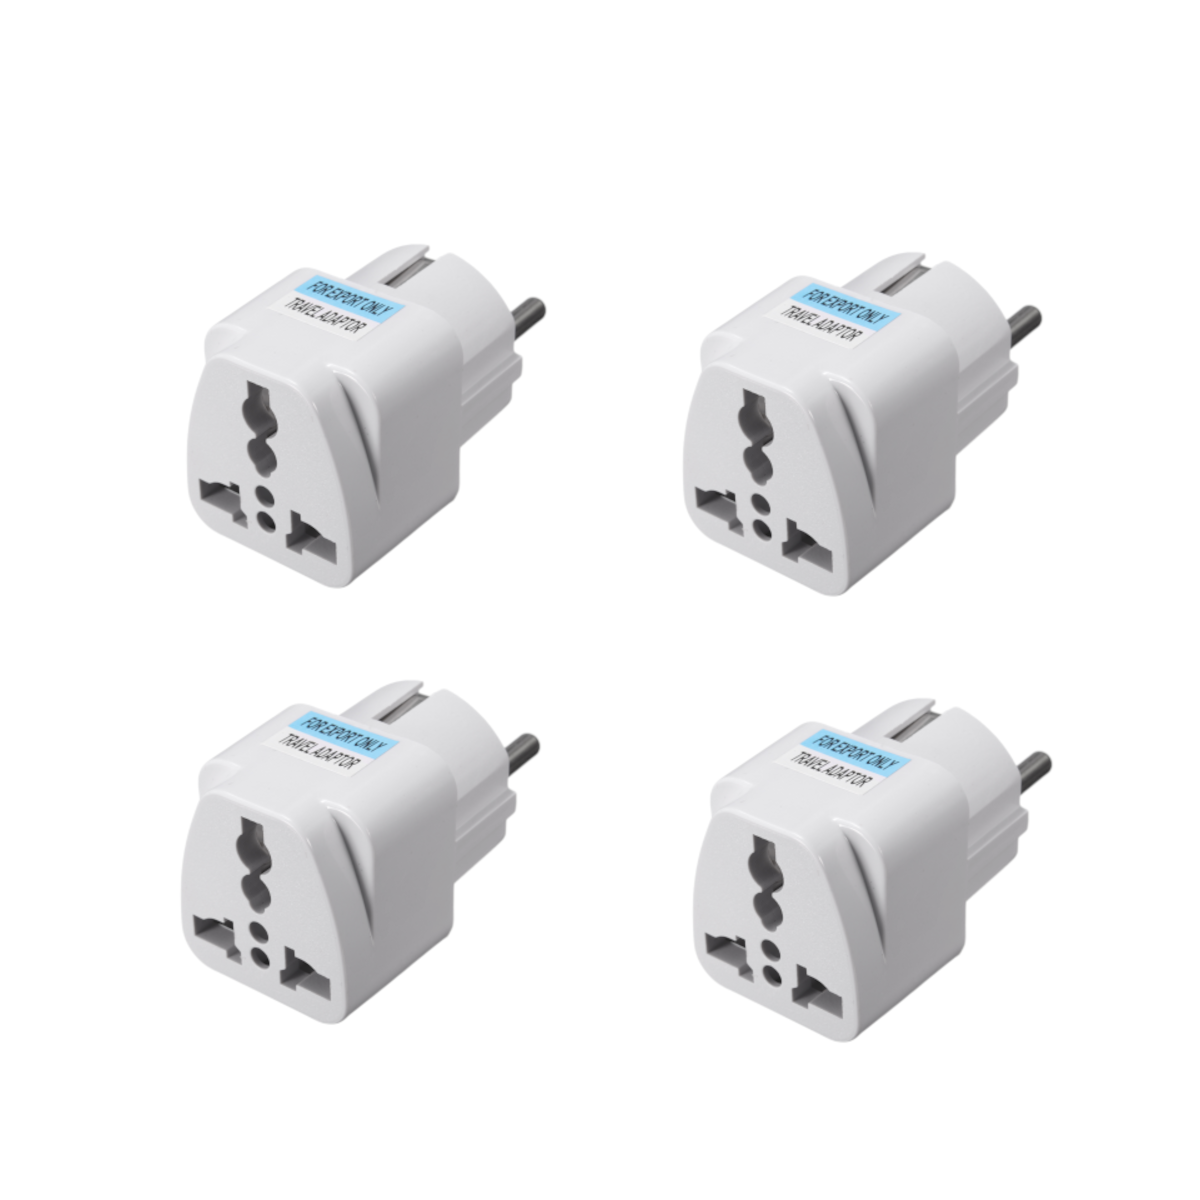 

4Pcs Travel Universal Power Outlet Adapter UK US EU AU to EU Plug Conversion Plug Socket Converter Connector